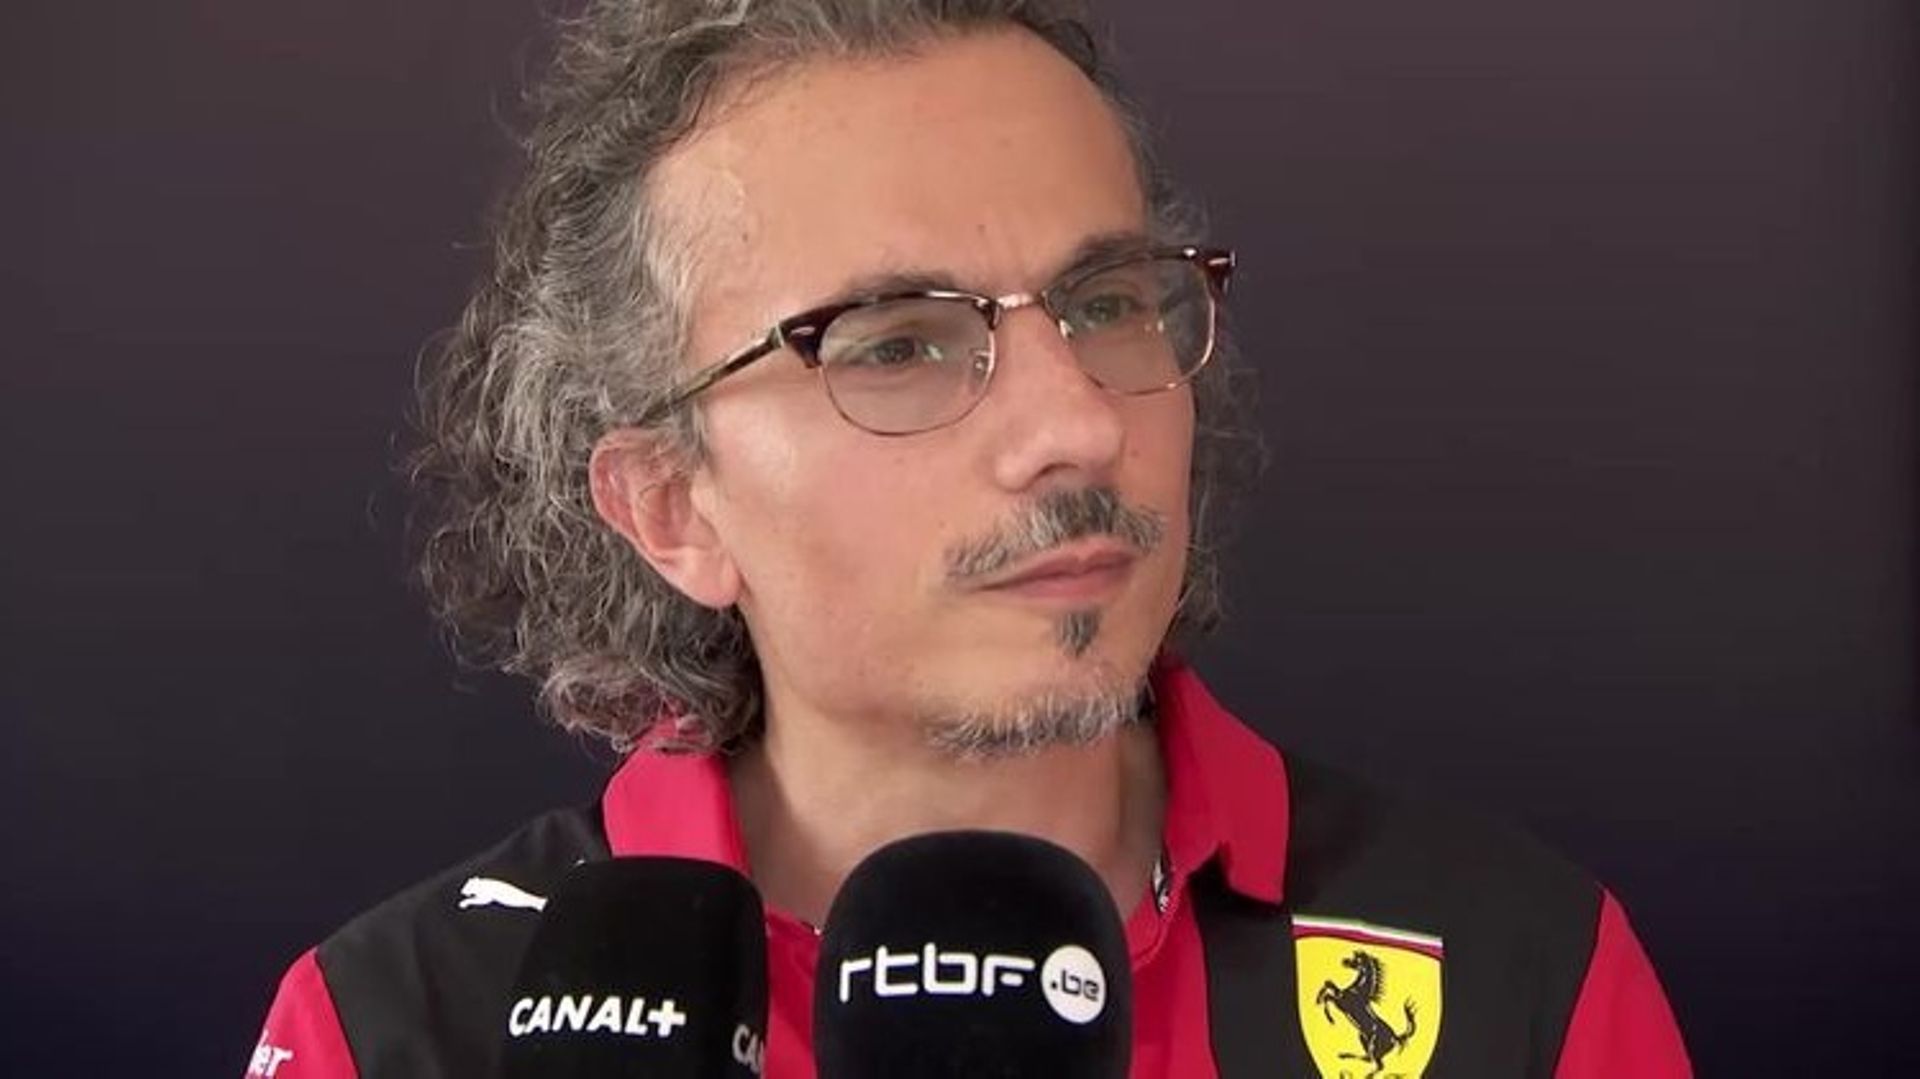 Mekies analyse la situation de Ferrari.